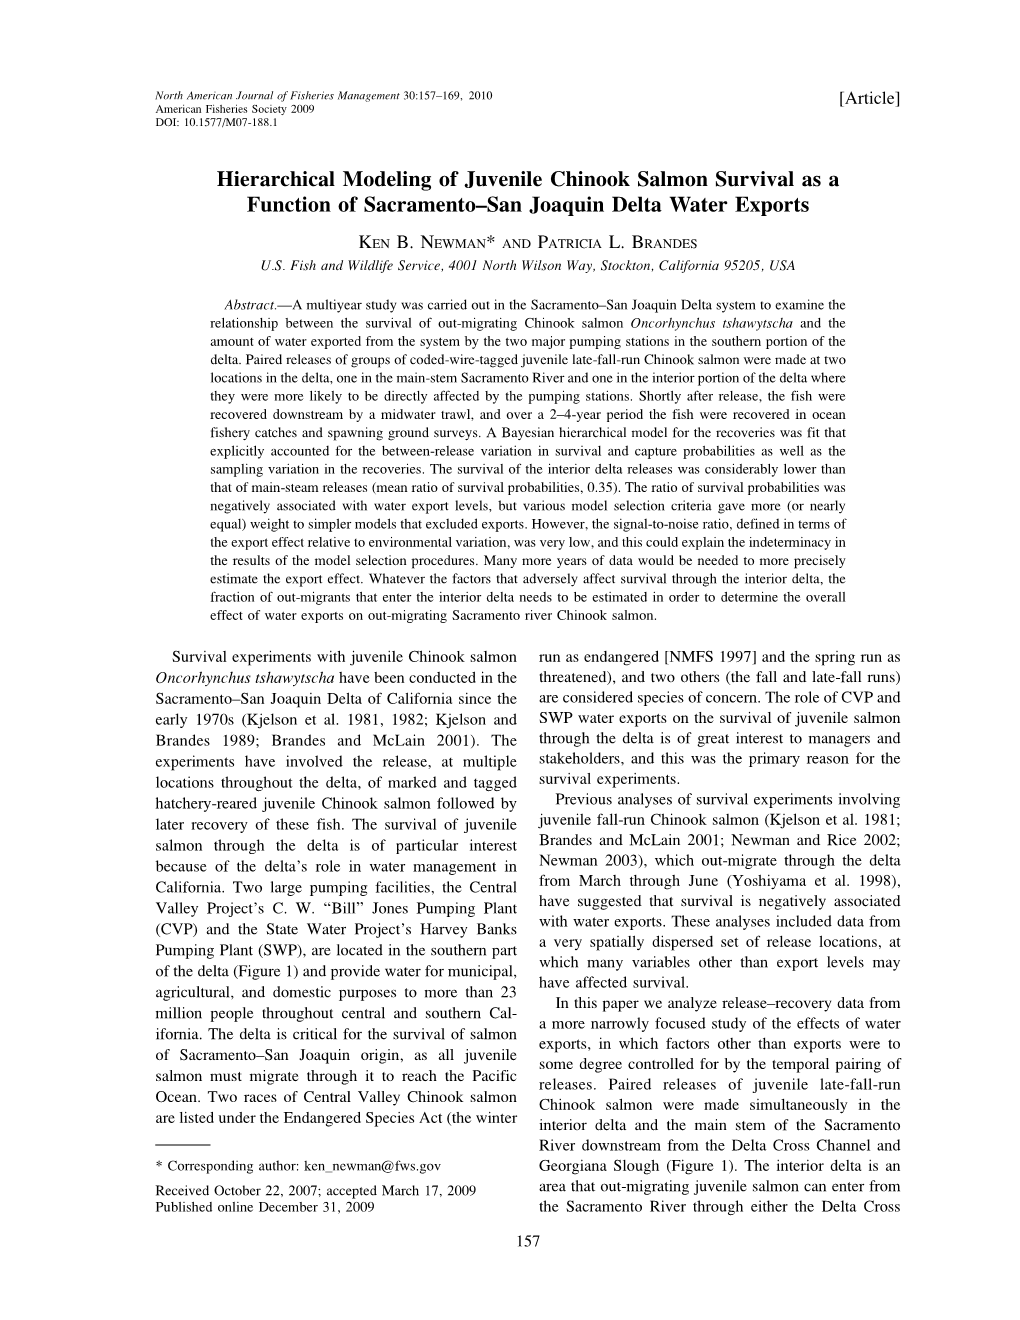 Hierarchical Modeling of Juvenile Chinook Salmon Survival As a Function of Sacramento–San Joaquin Delta Water Exports